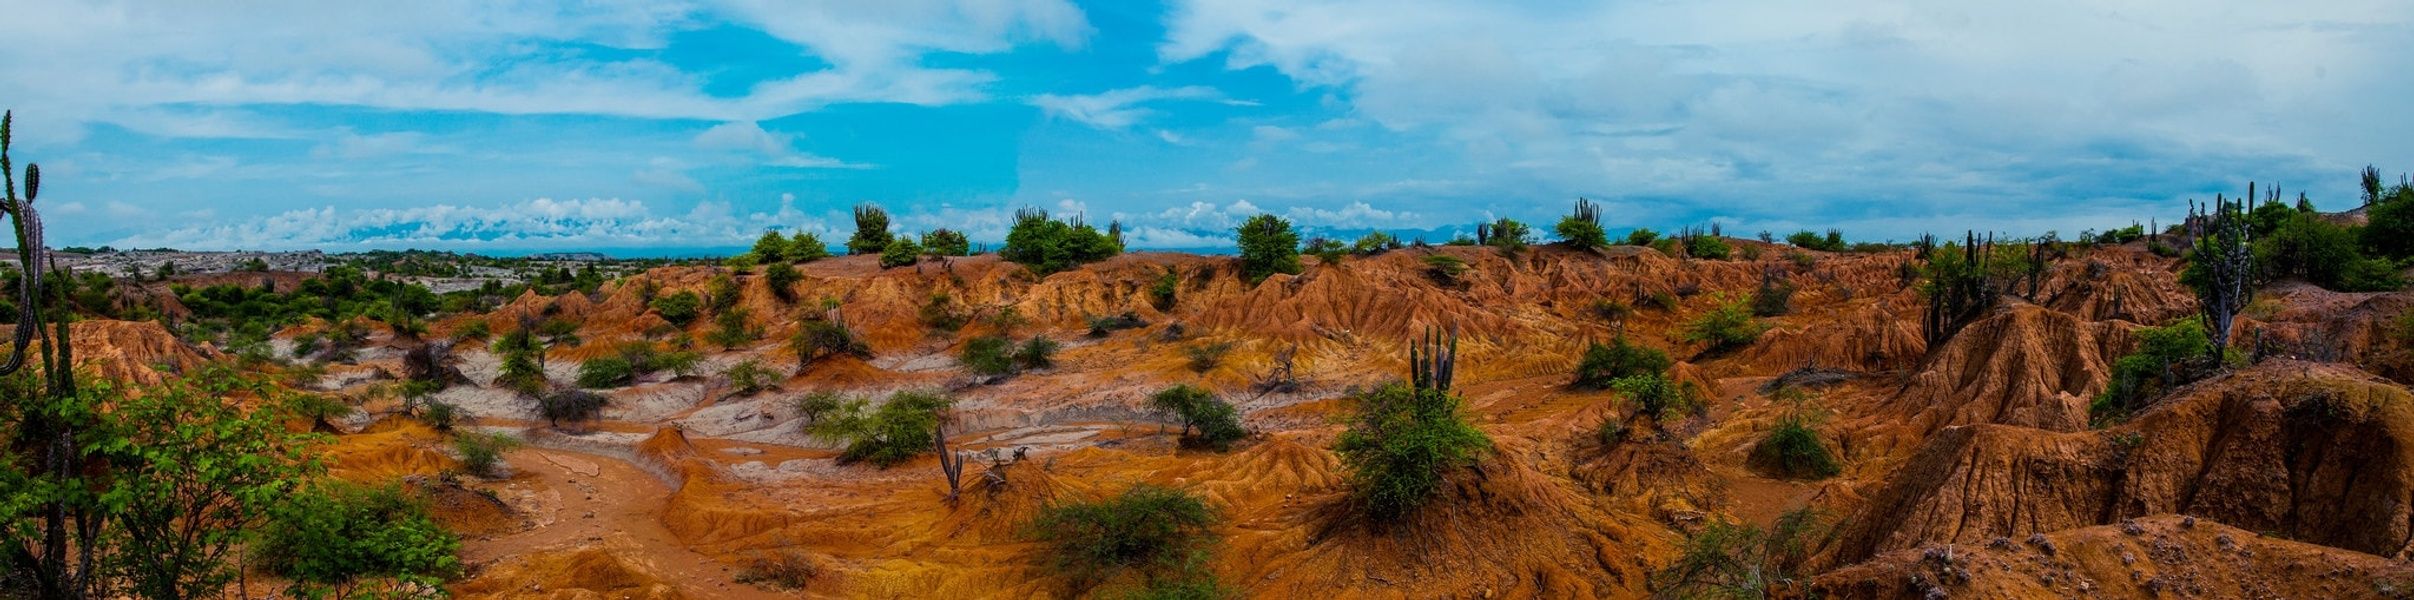 Tatacoa Desert Colombia